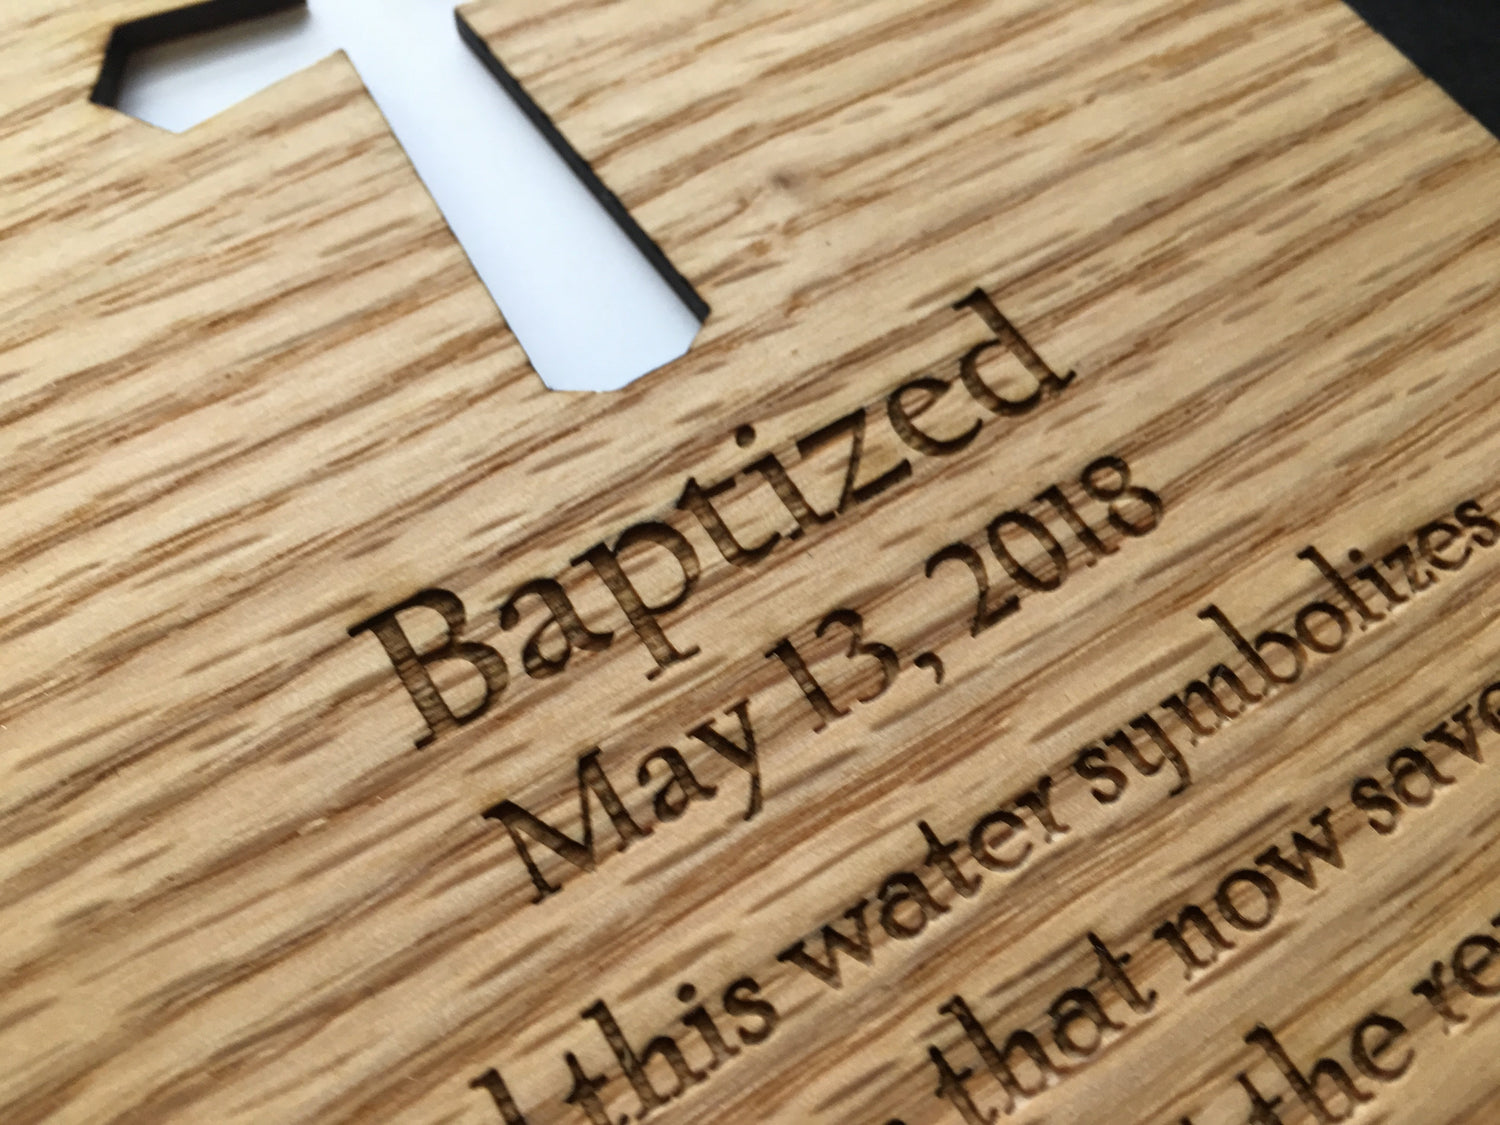 8x10 Baptism Picture Frame, Picture Frame, home decor, laser engraved - Legacy Images